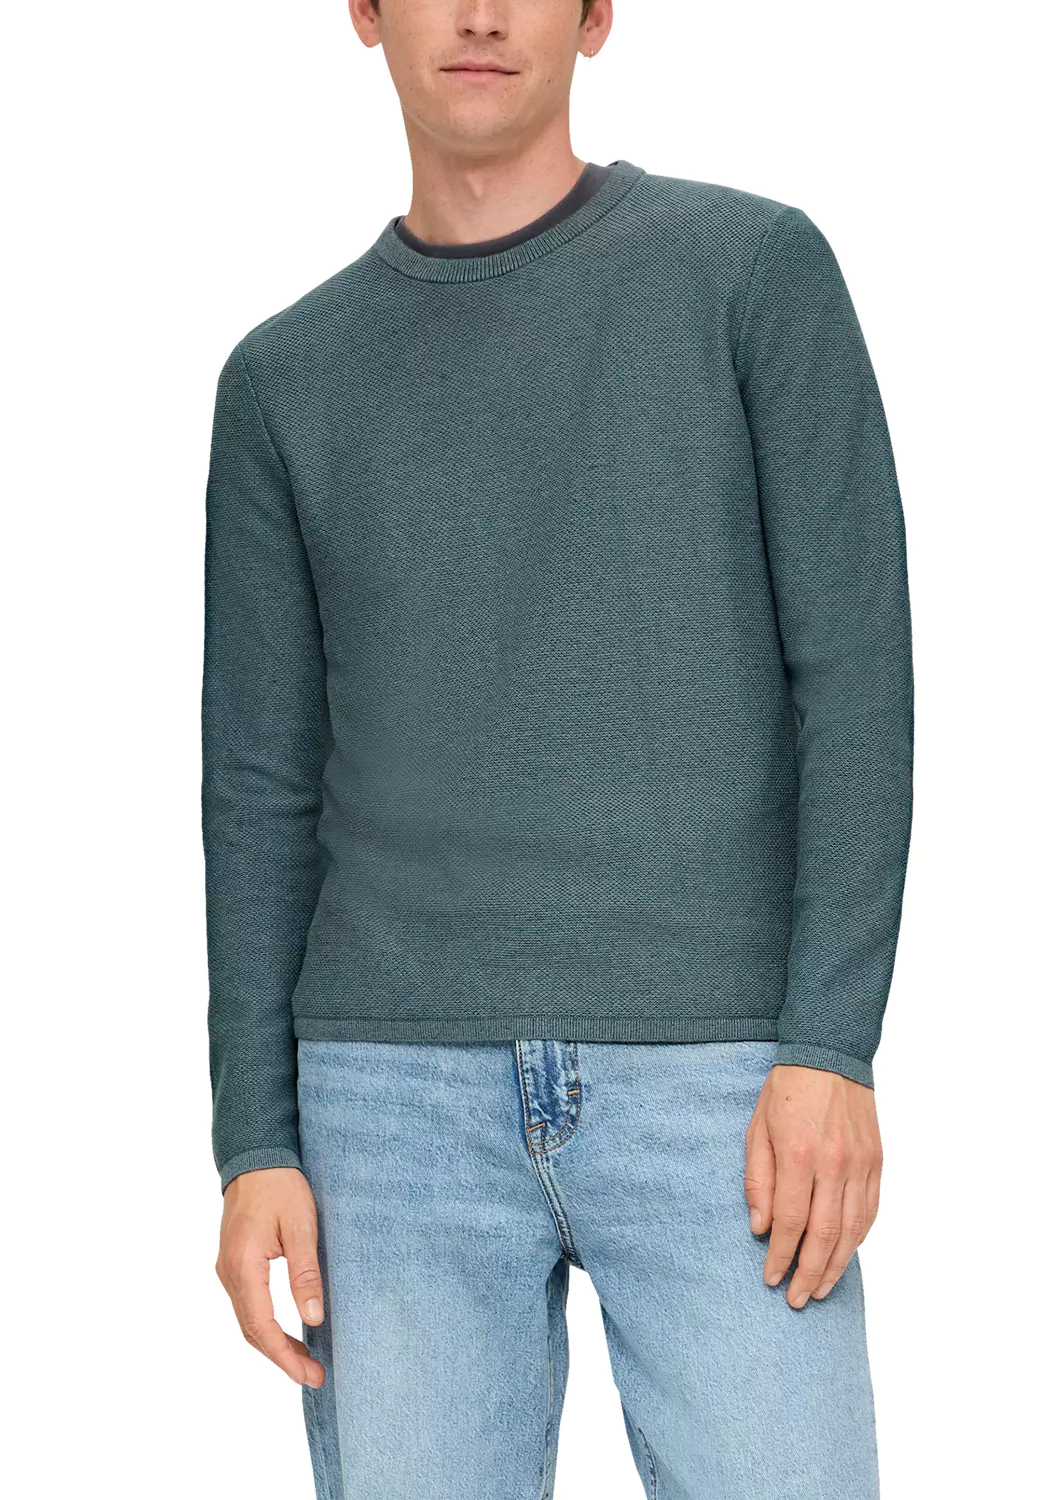 Пуловер мужской QS by s.Oliver 50.3.51.17.170.2134570*63W0*L петроль, размер L